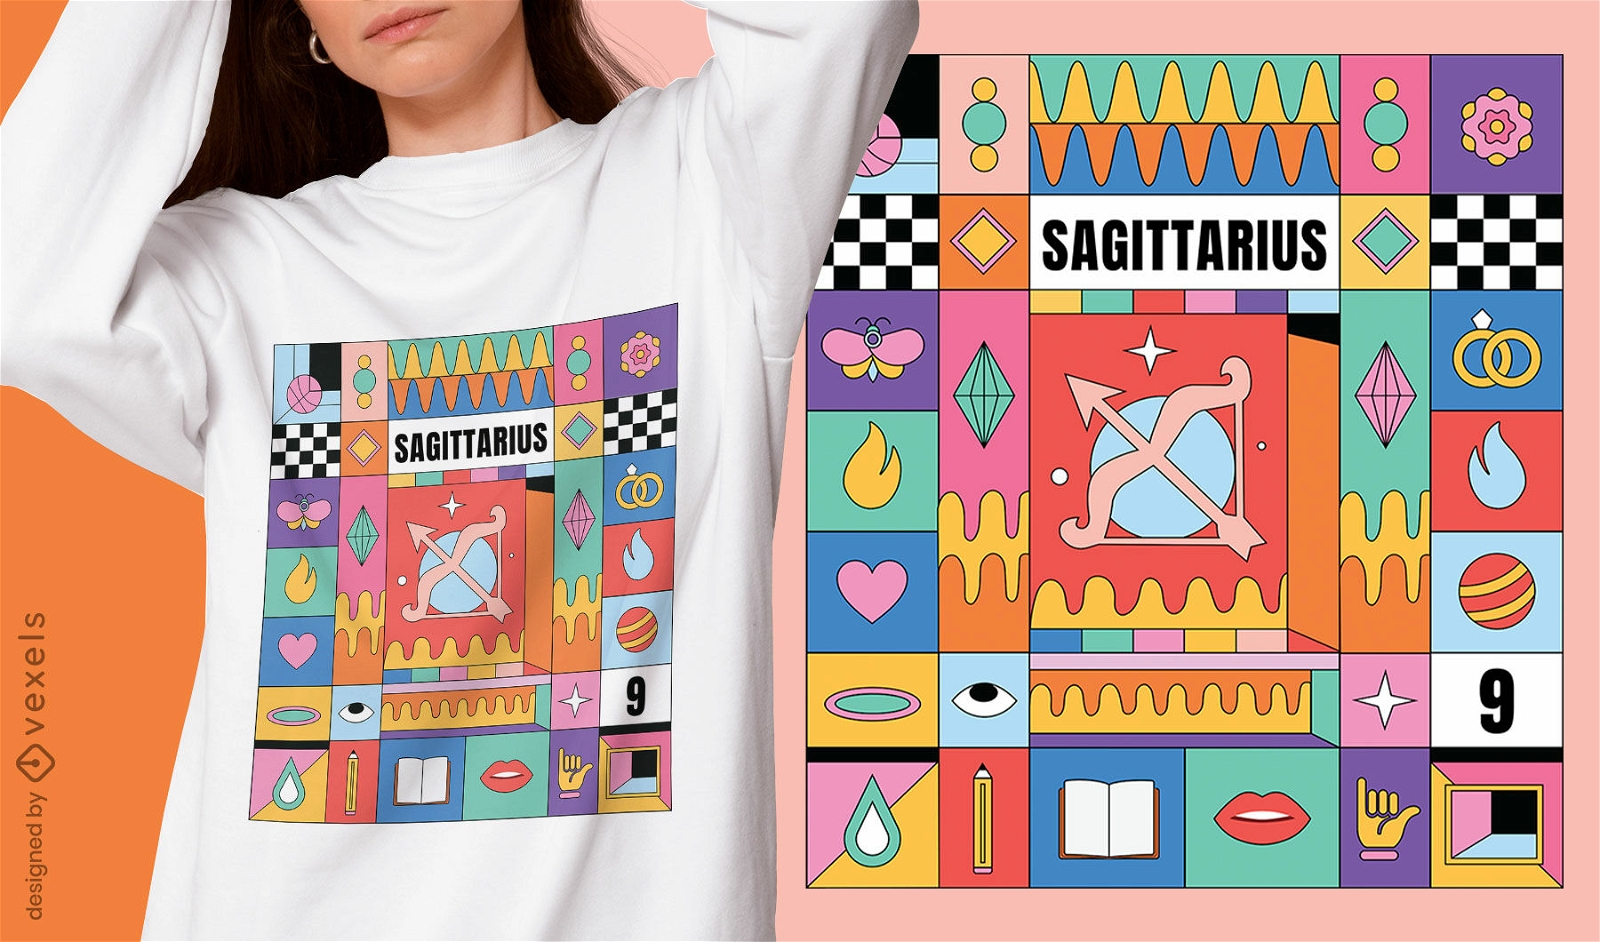 Sagittarius colorful zodiac sign t-shirt design